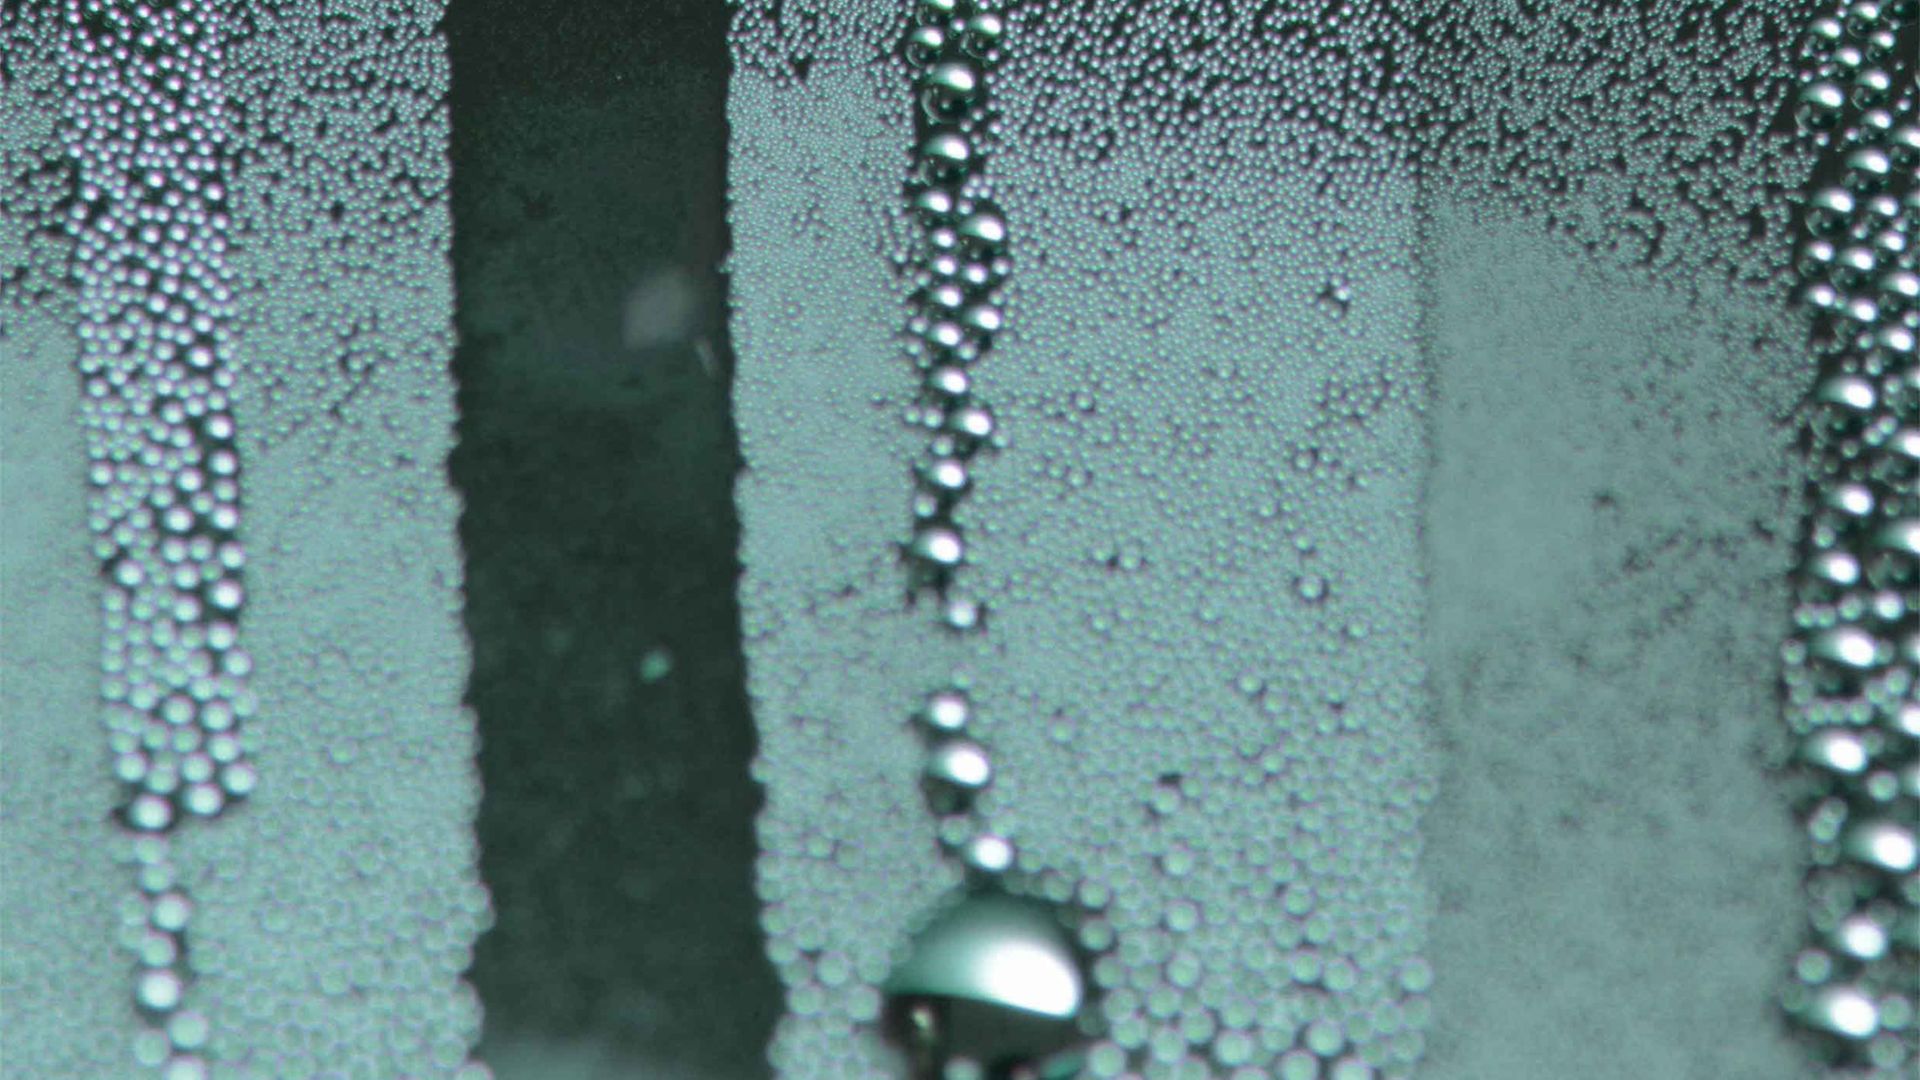 Droplet formation 